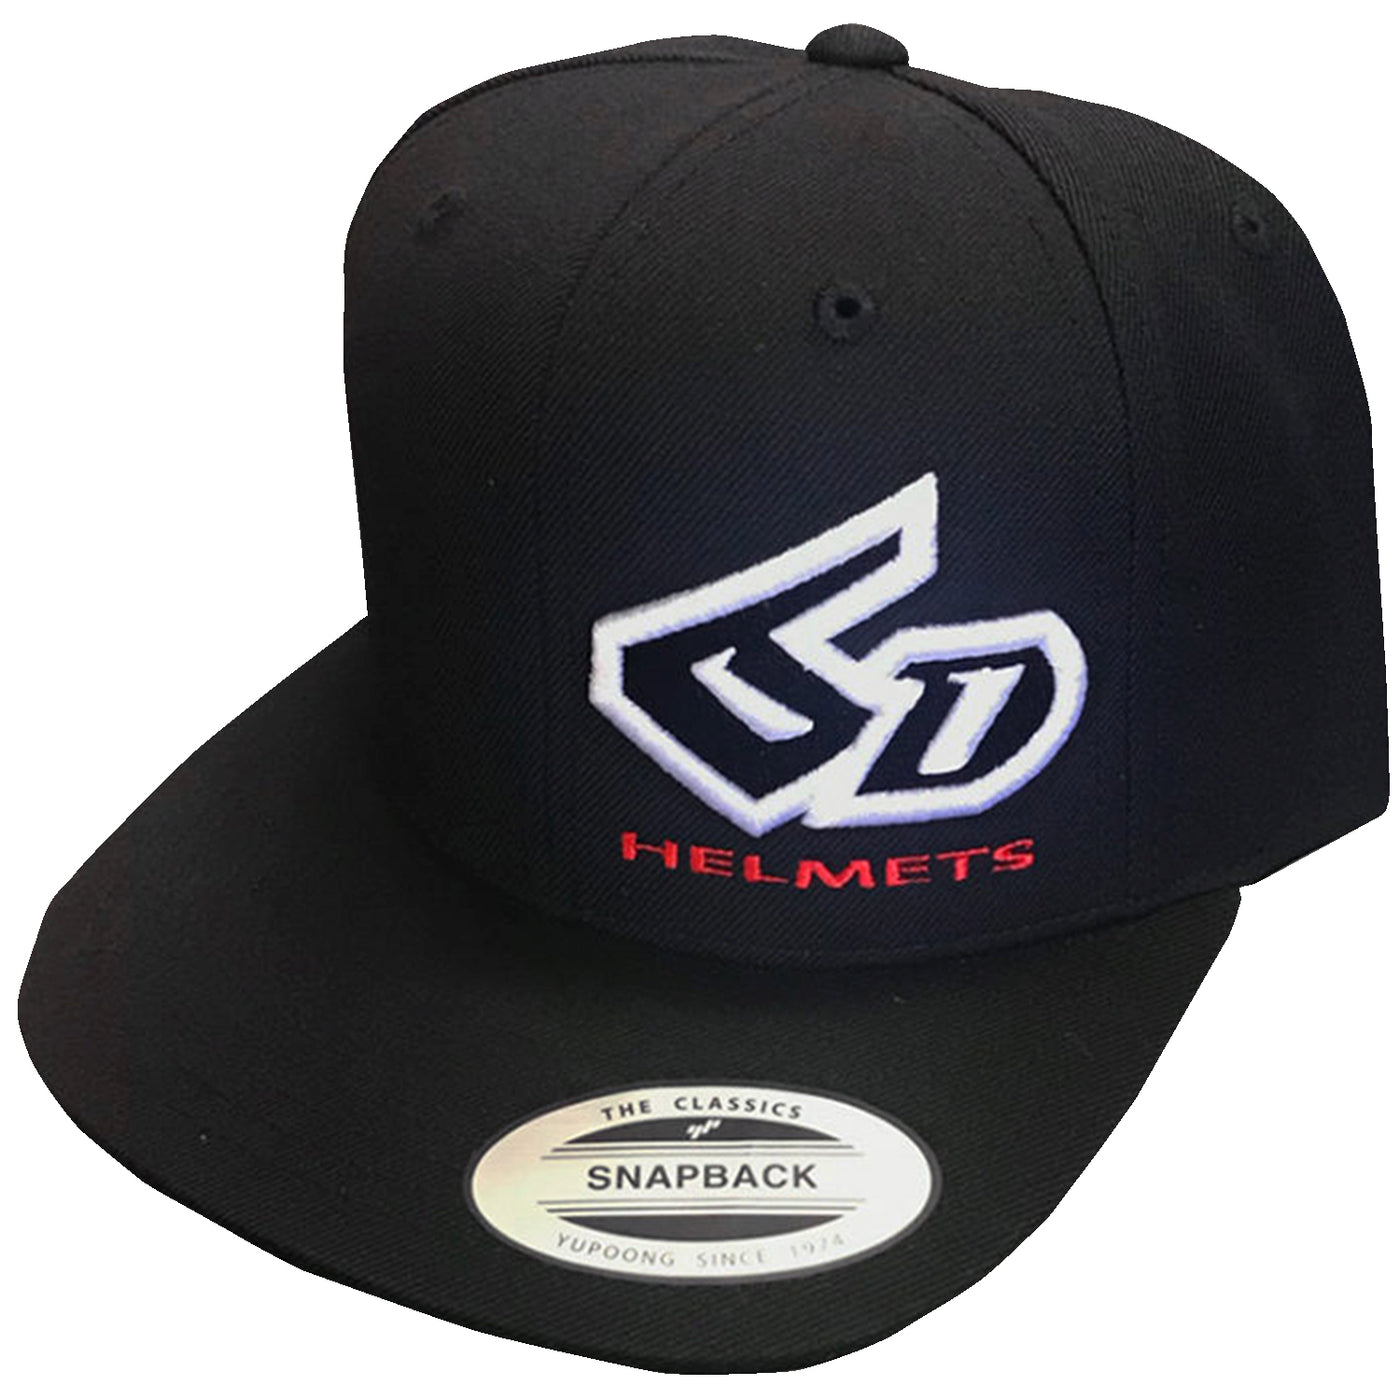 6D Helmets Logo Snapback Hat